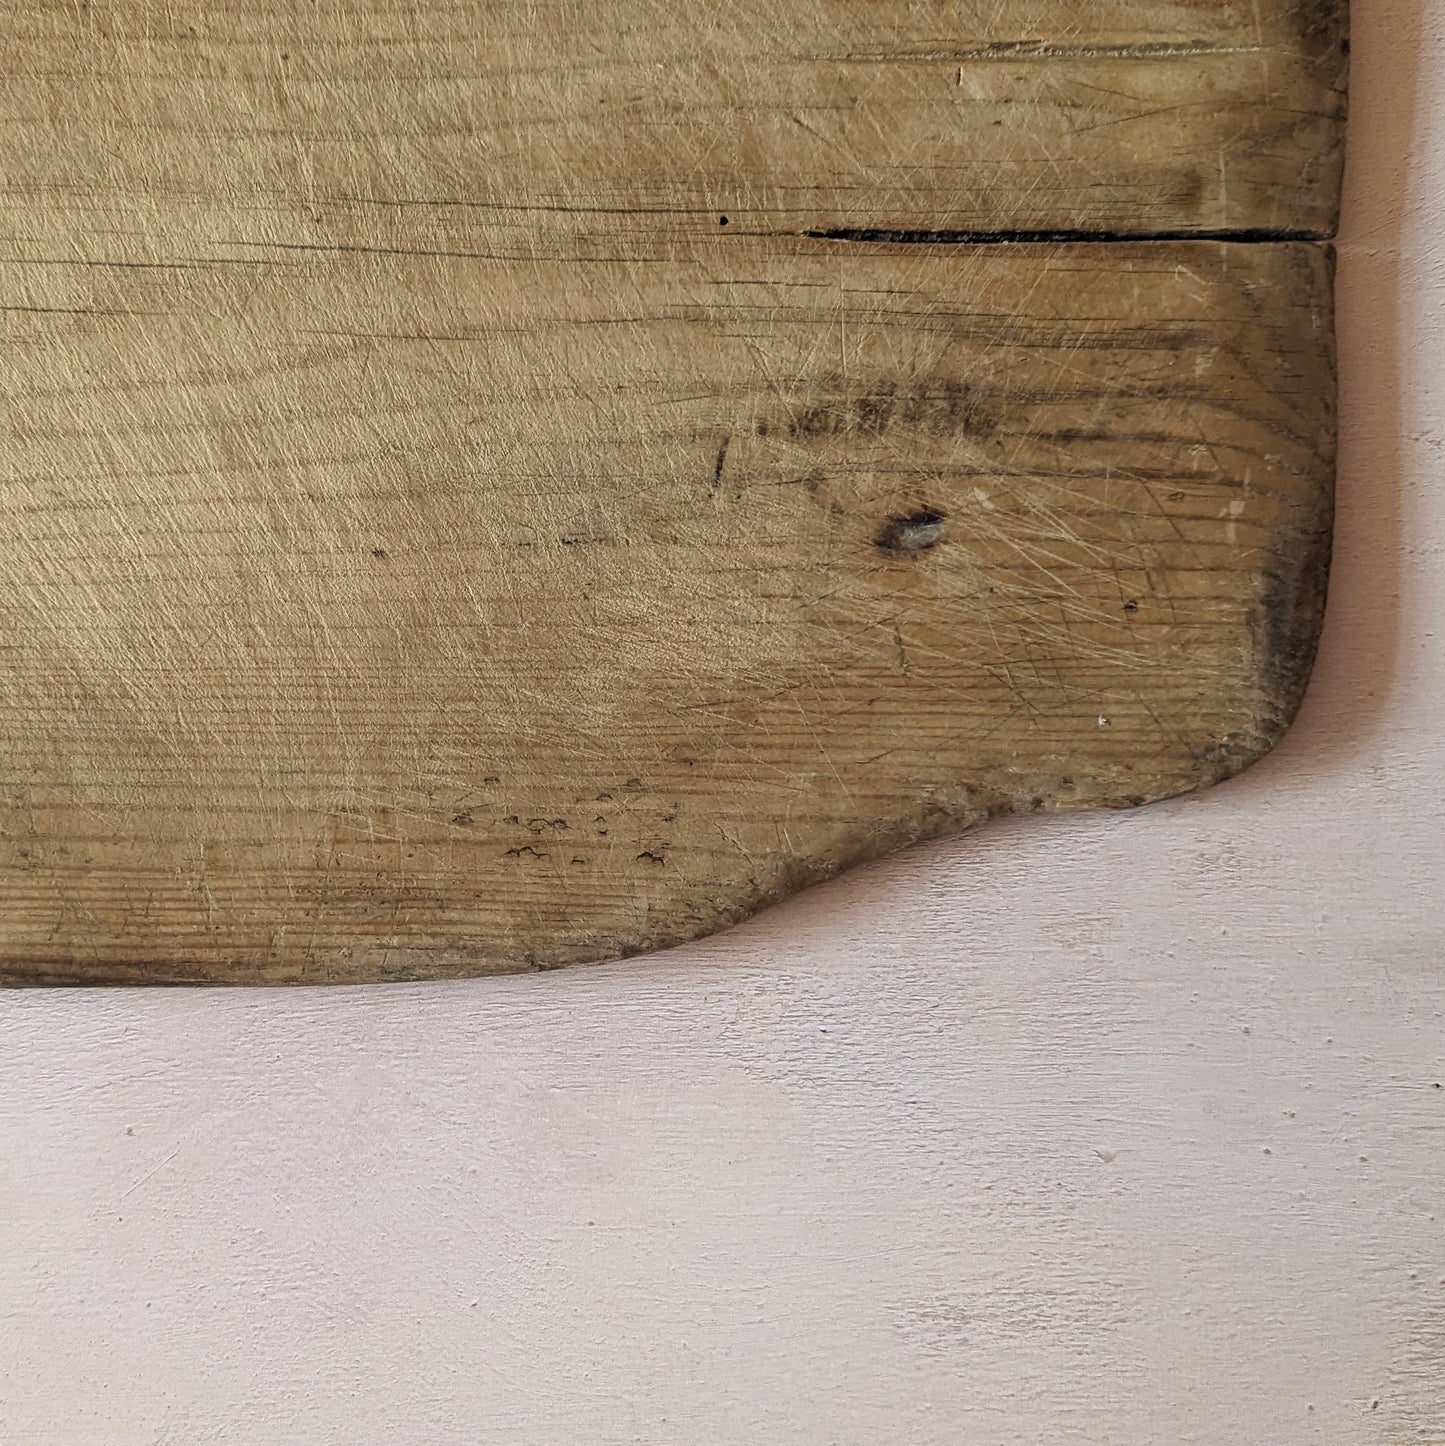 Primitive Antique Wood Bread Board